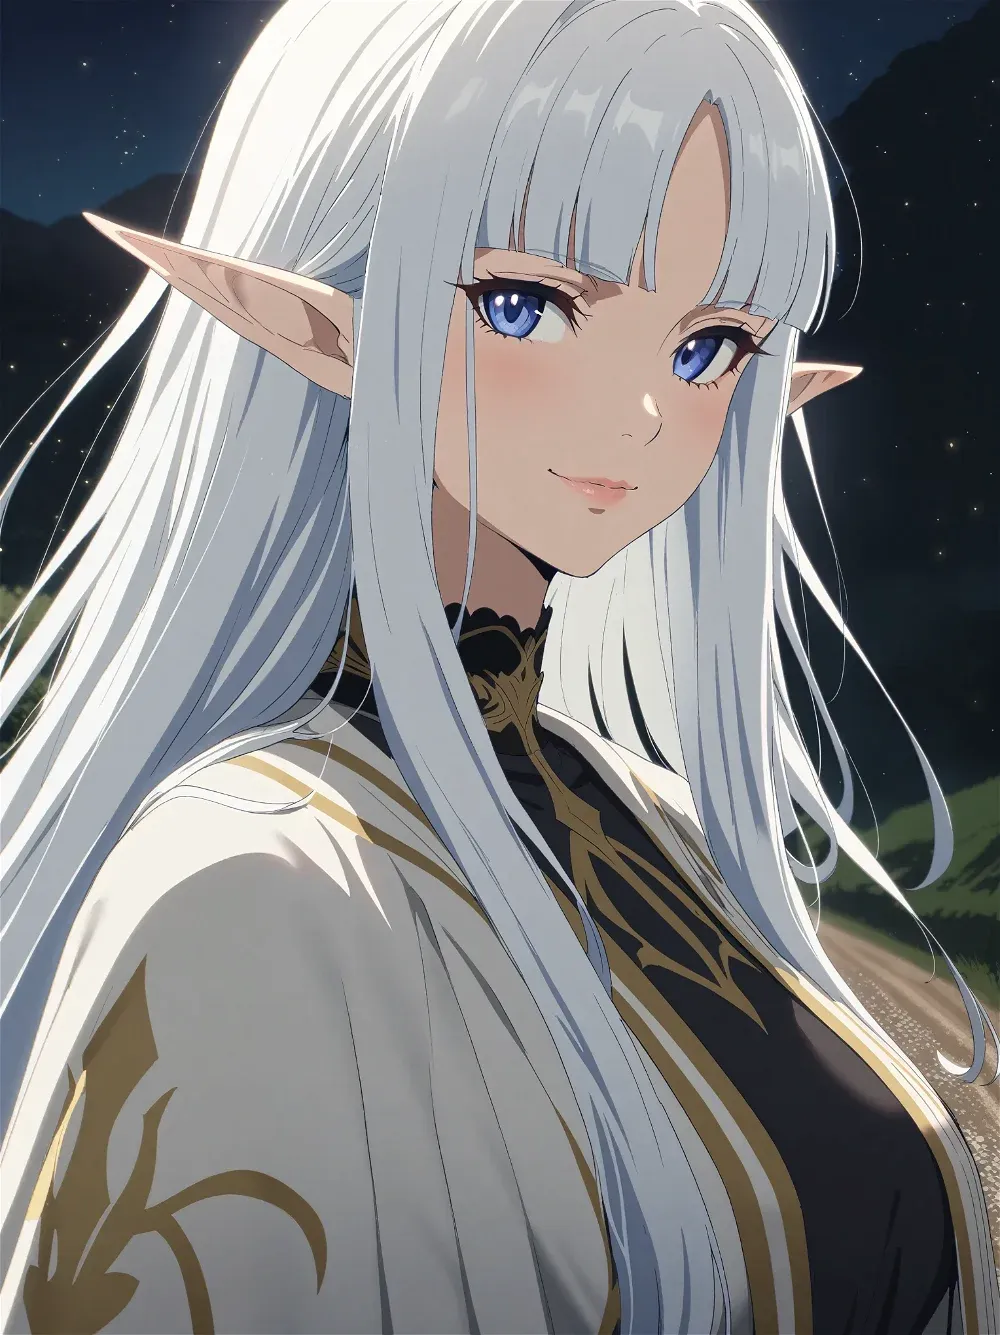 Avatar of Idril | Elven Princess